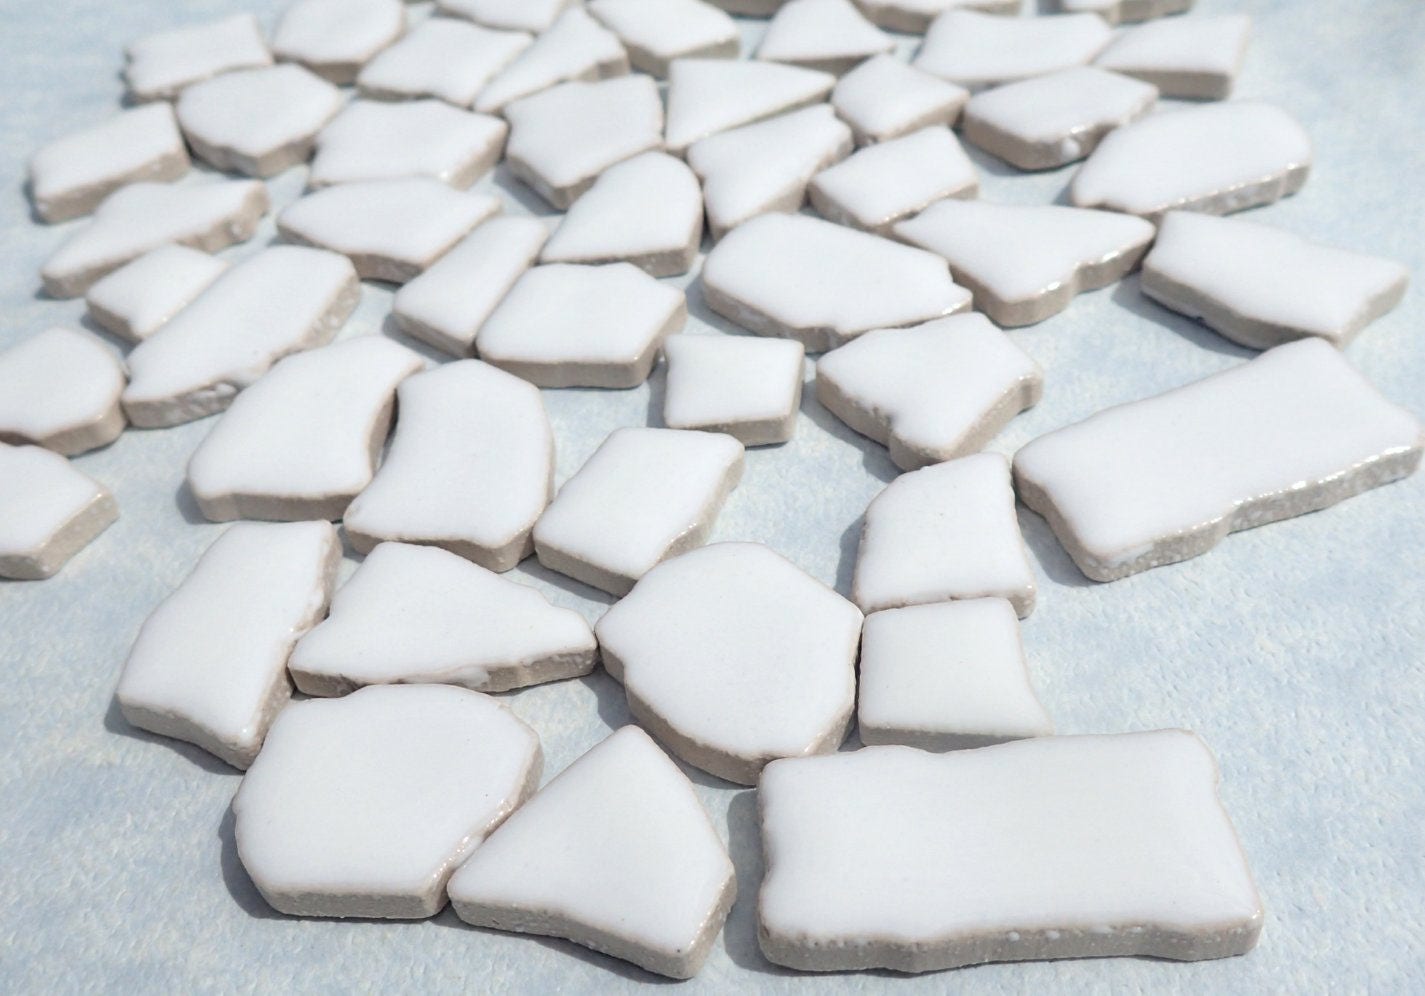 White Mosaic Ceramic Tiles - Random Shapes - Half Pound - Assorted Sizes Jigsaw Puzzle Type Pieces